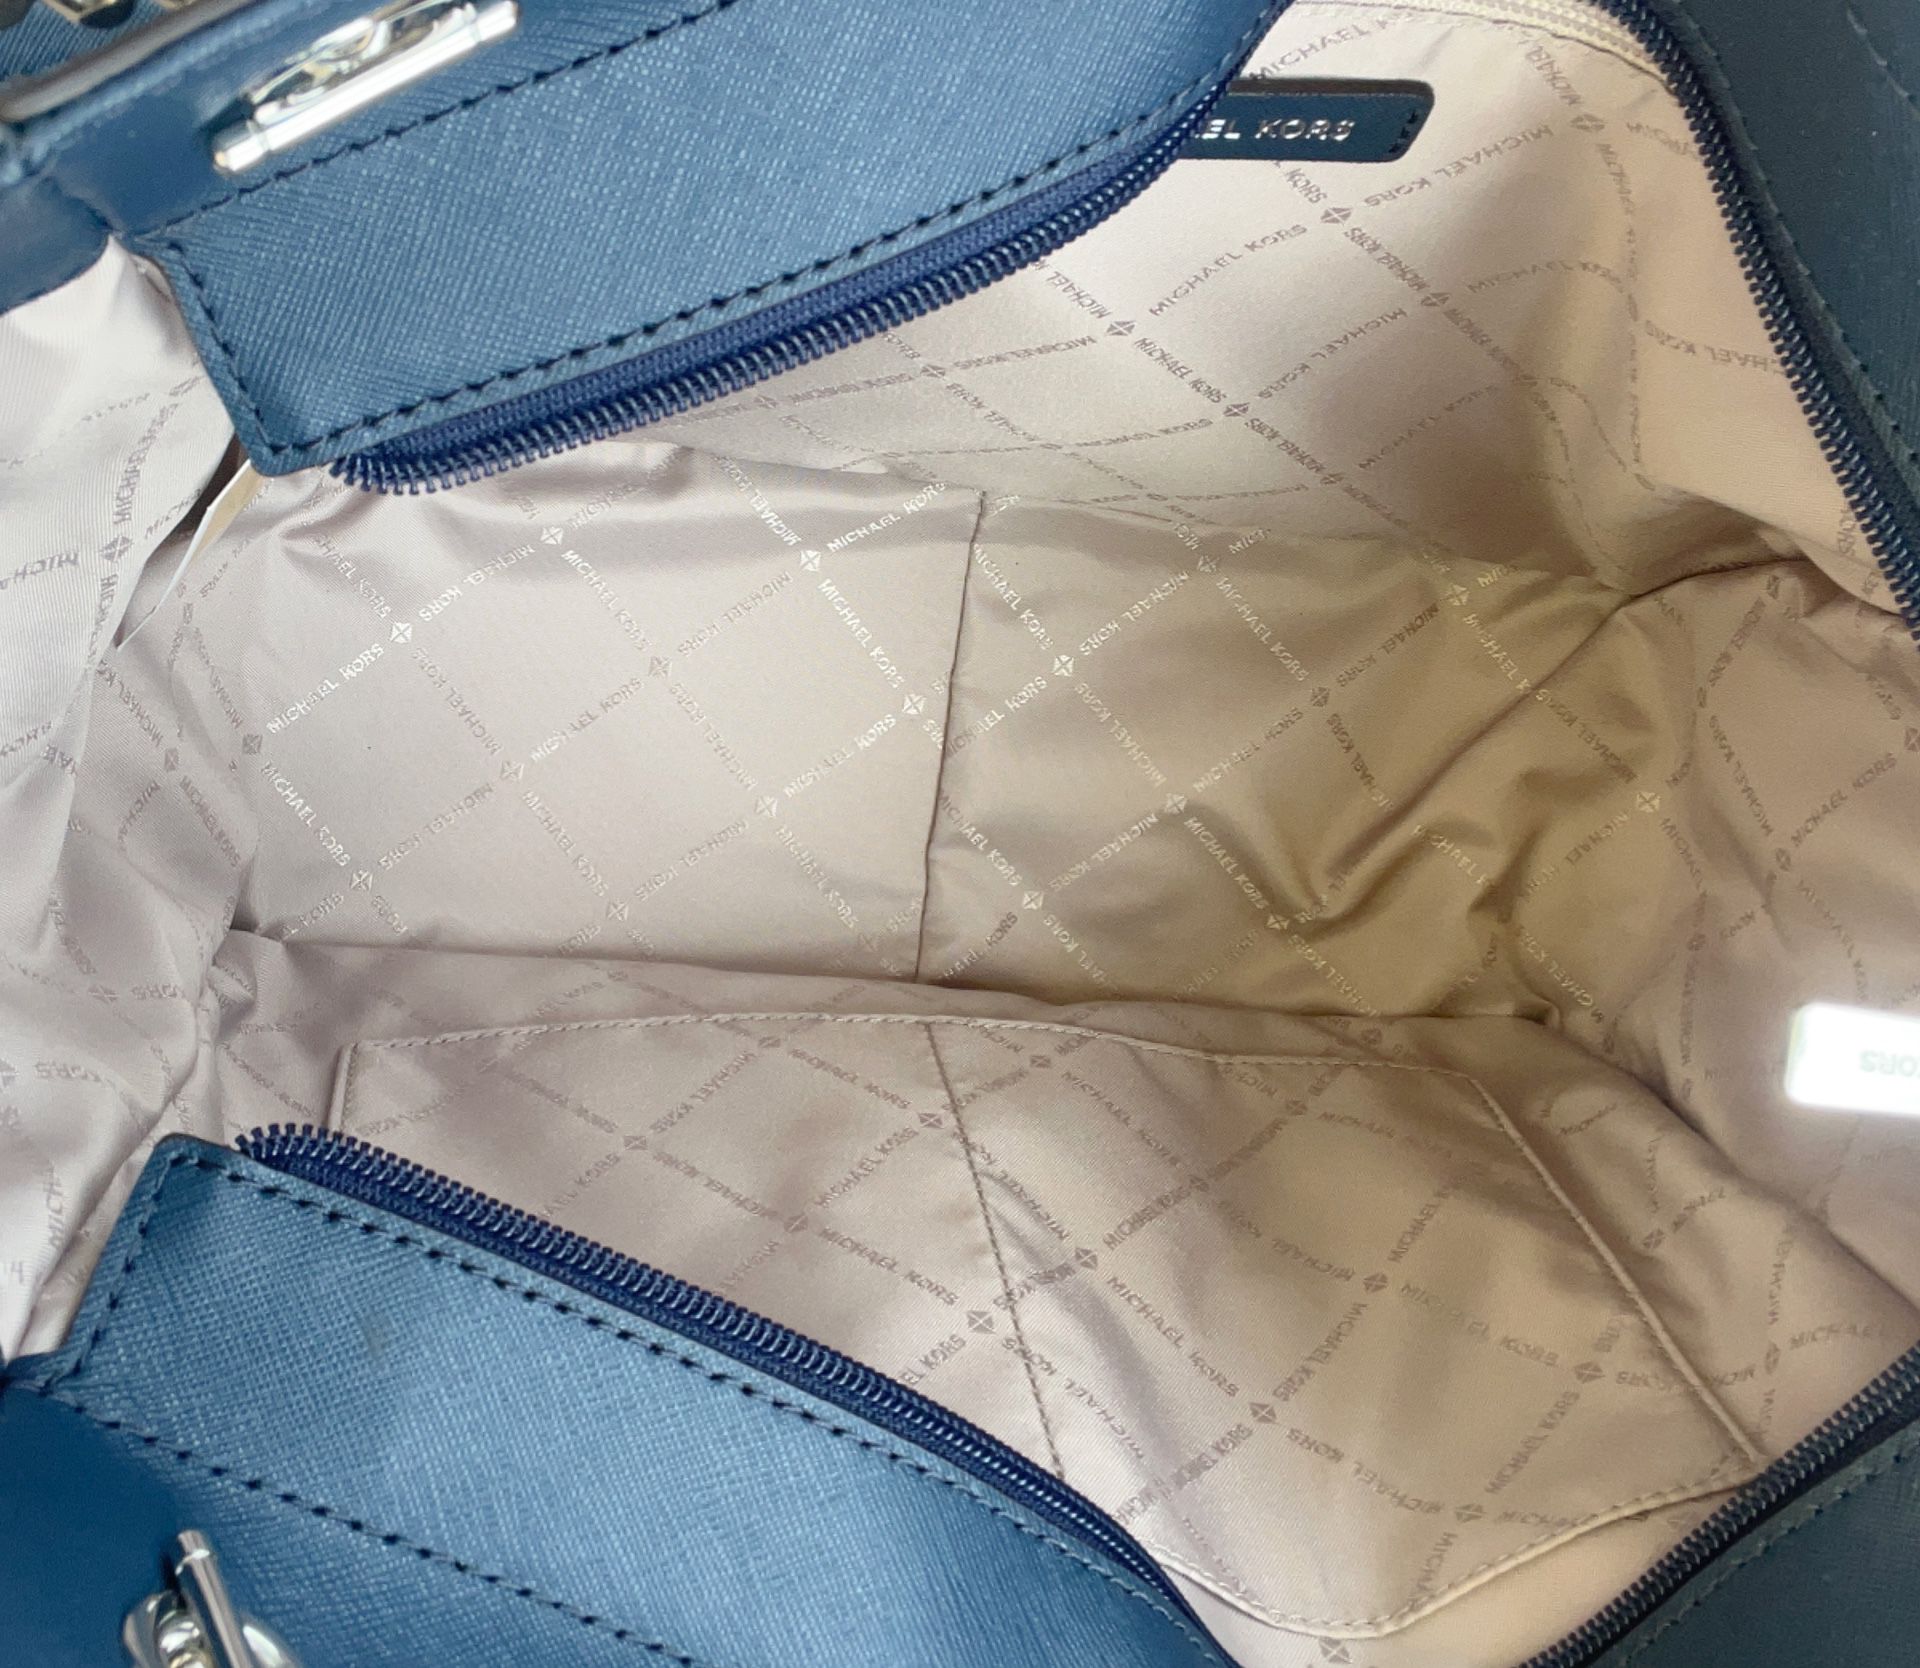 Michael Kors Jet Set Travel Large Zip Shoulder Chain Tote Navy Saffiano  Leather